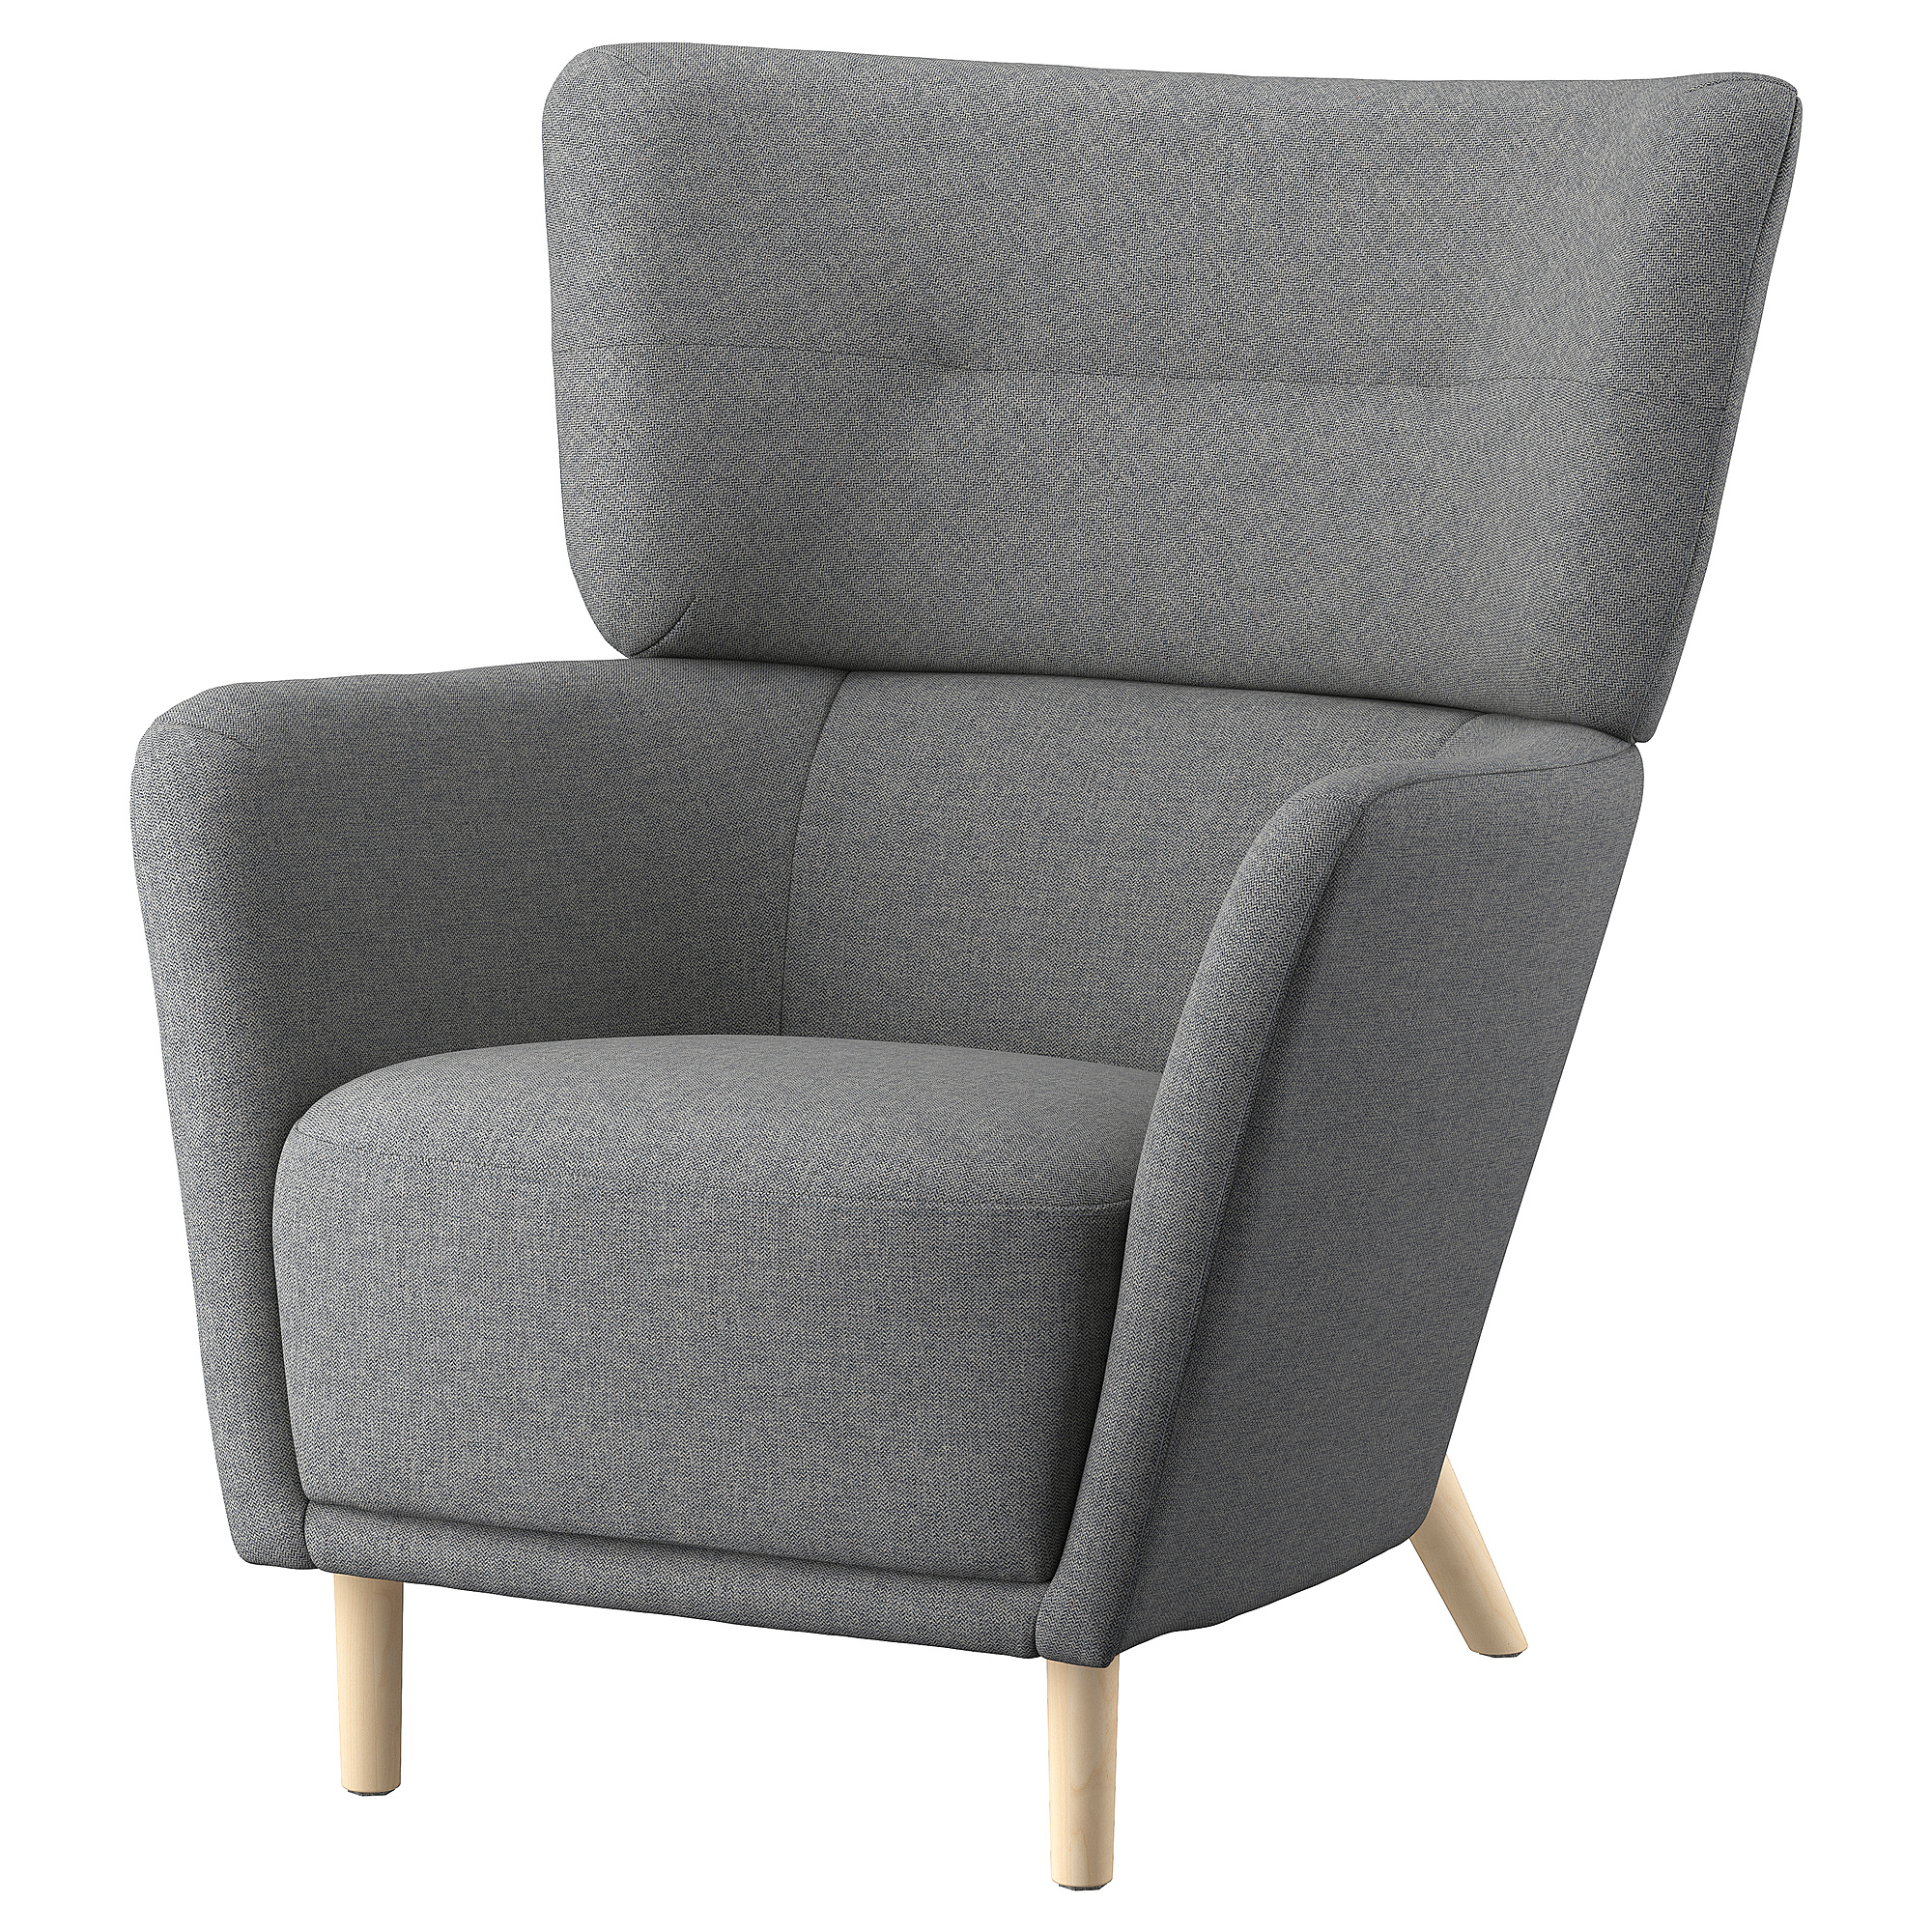 OSKARSHAMN - 扶手椅, Tibbleby 米黃色/灰色| IKEA 香港及澳門